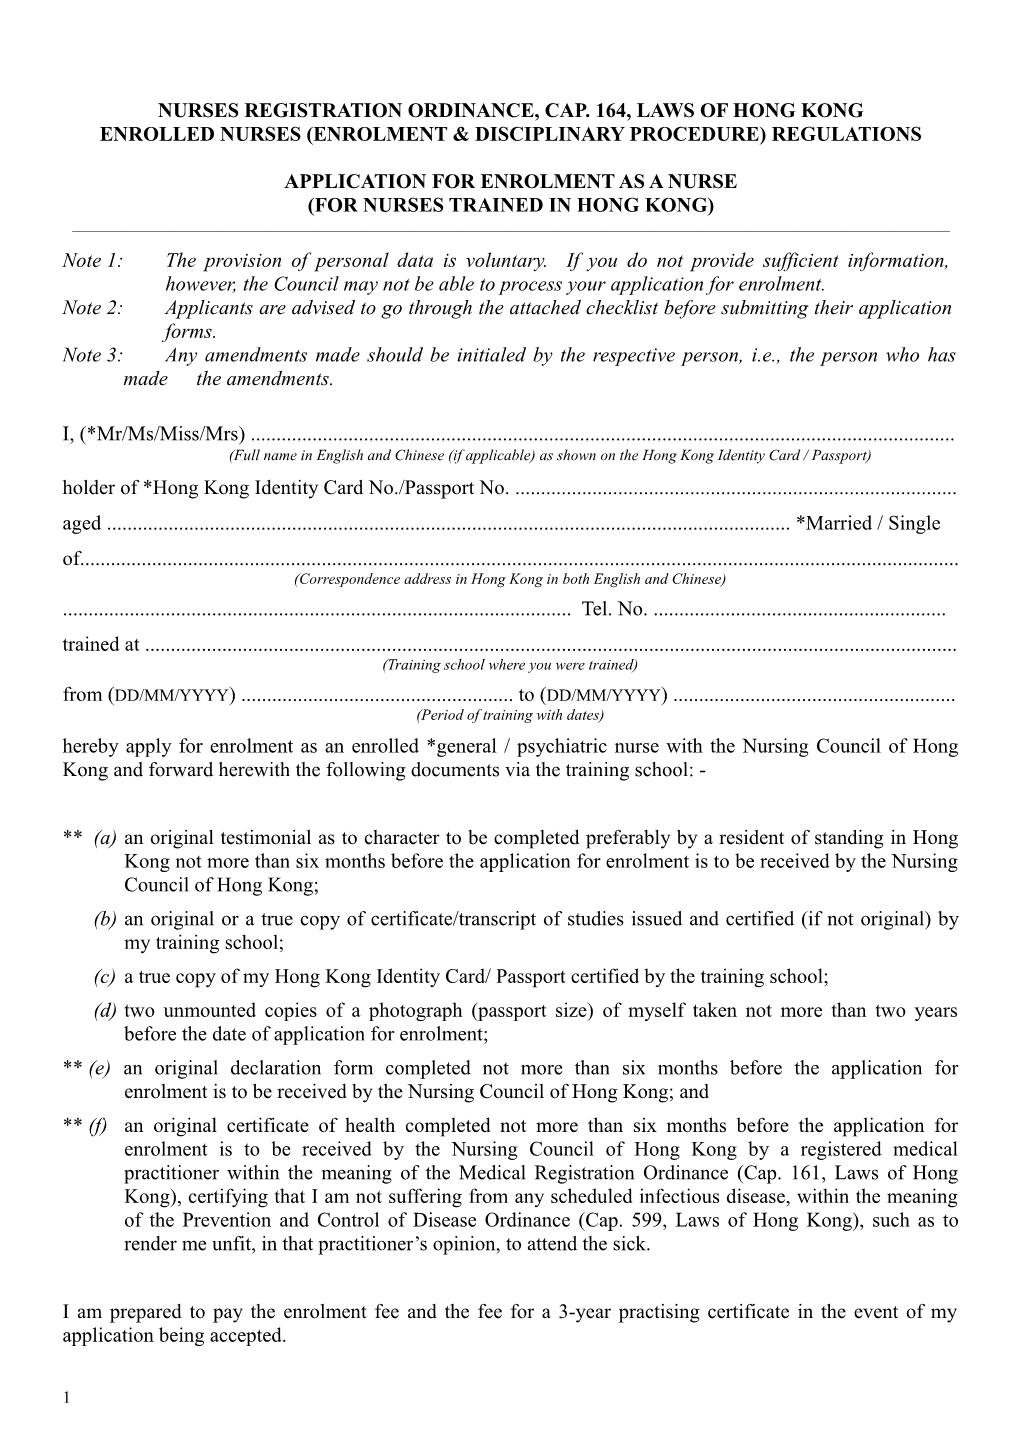 Application for Enrolment for NURSES TRAINED in HONG KONG